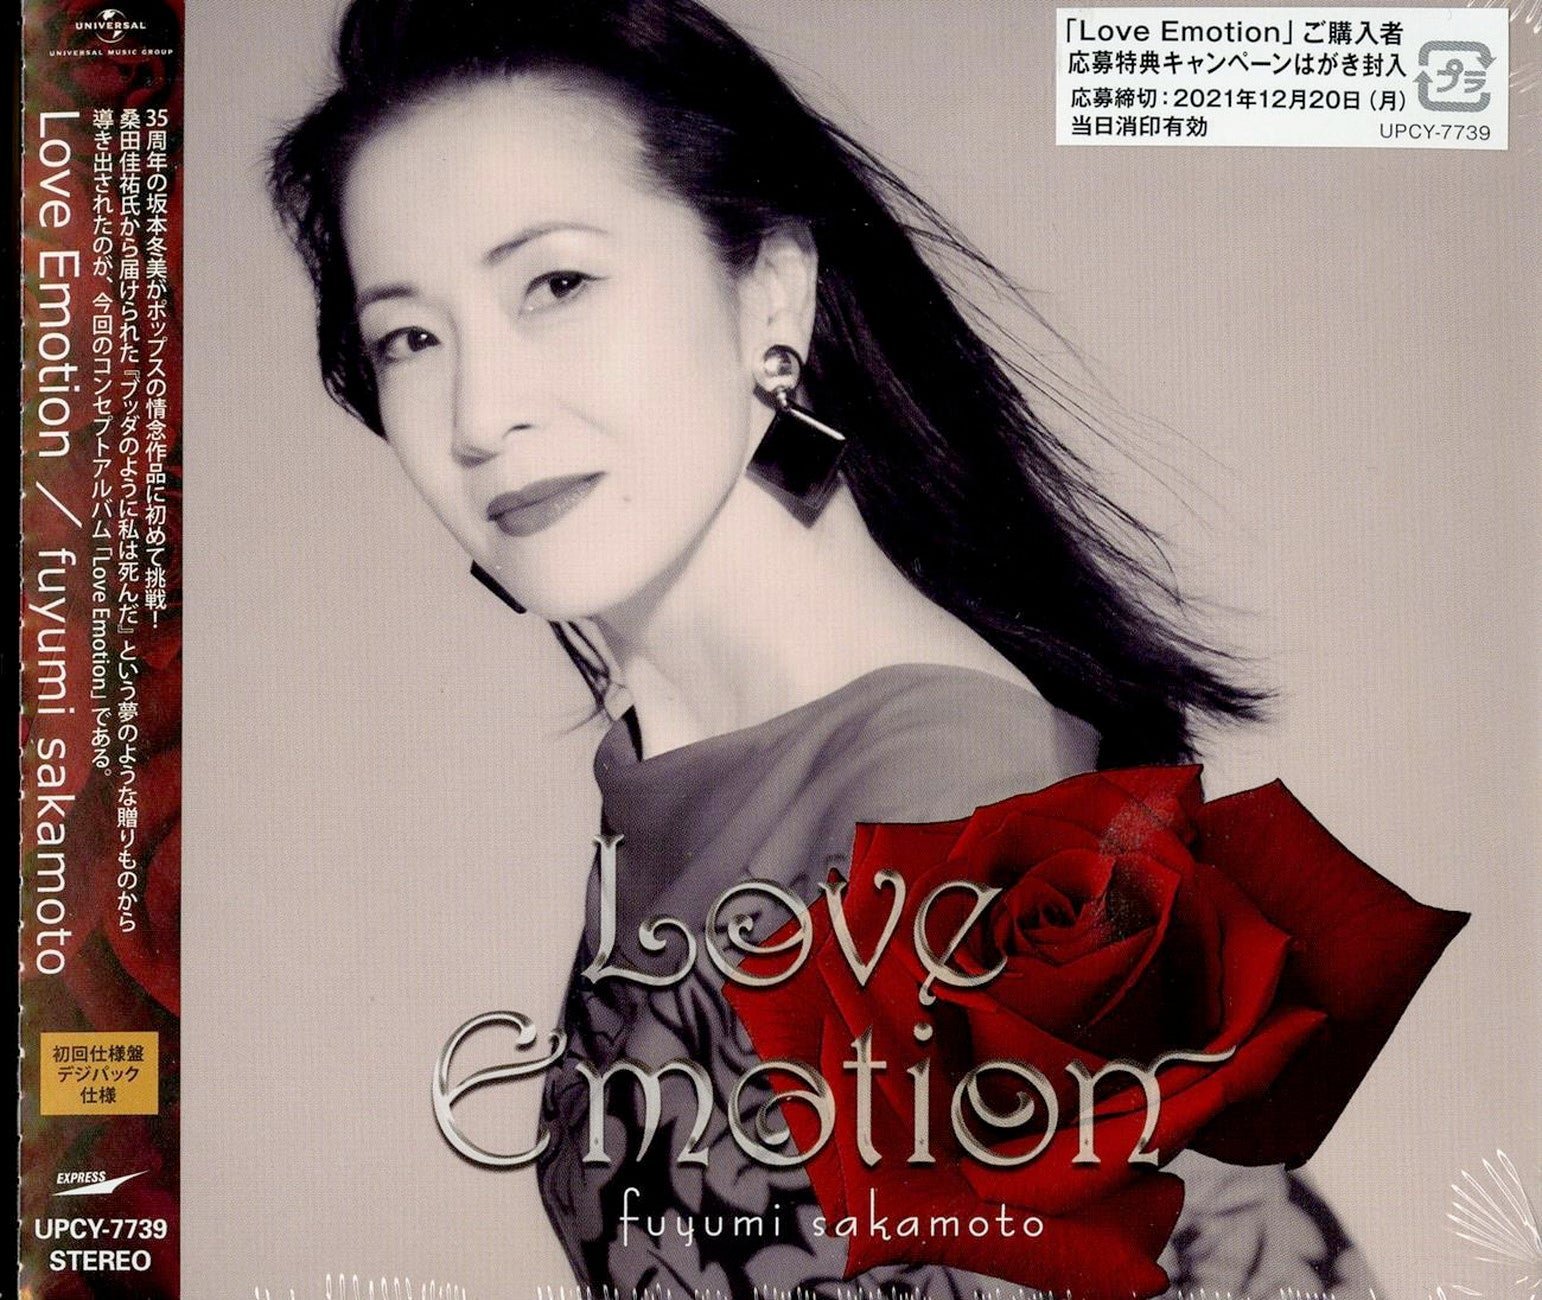 CD Shop - SAKAMOTO, FUYUMI & KITAJI LOVE EMOTION